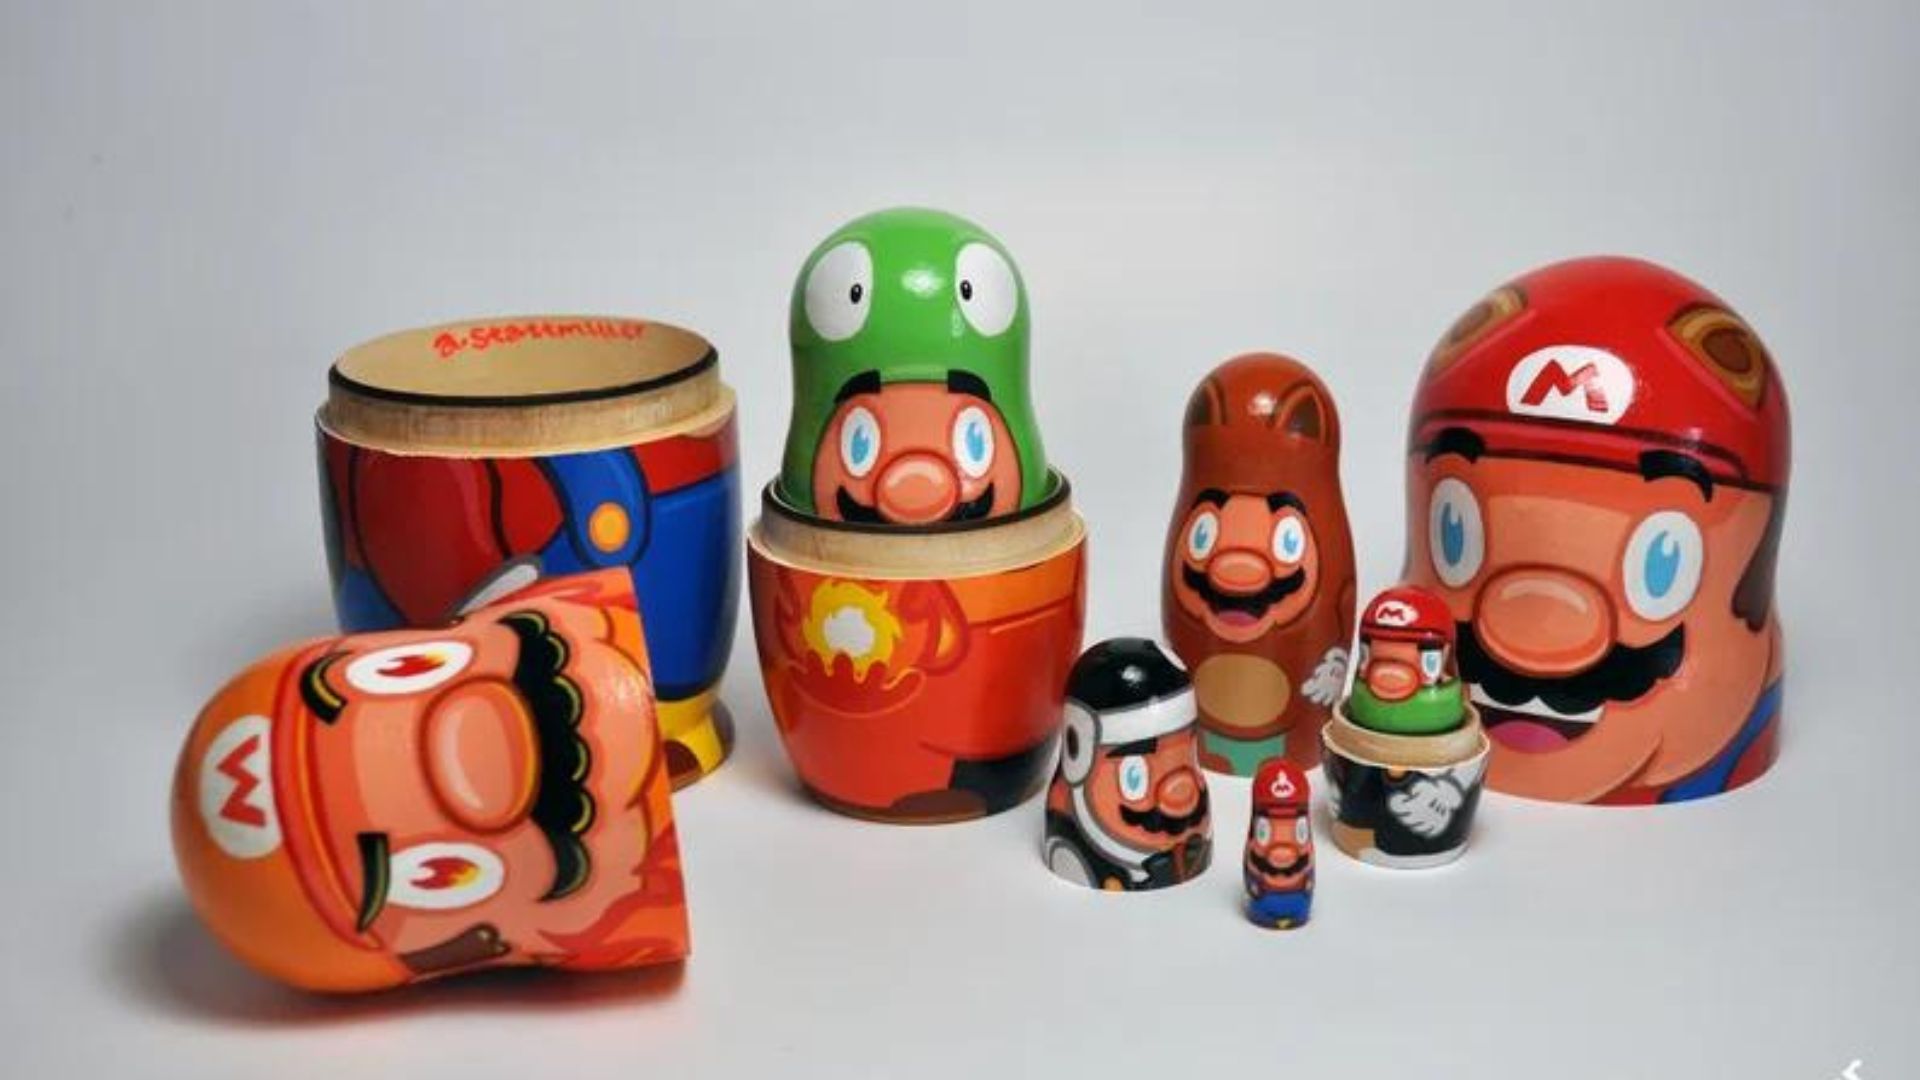 Mamma mia! These Mario matryoshka dolls are either cute or cursed